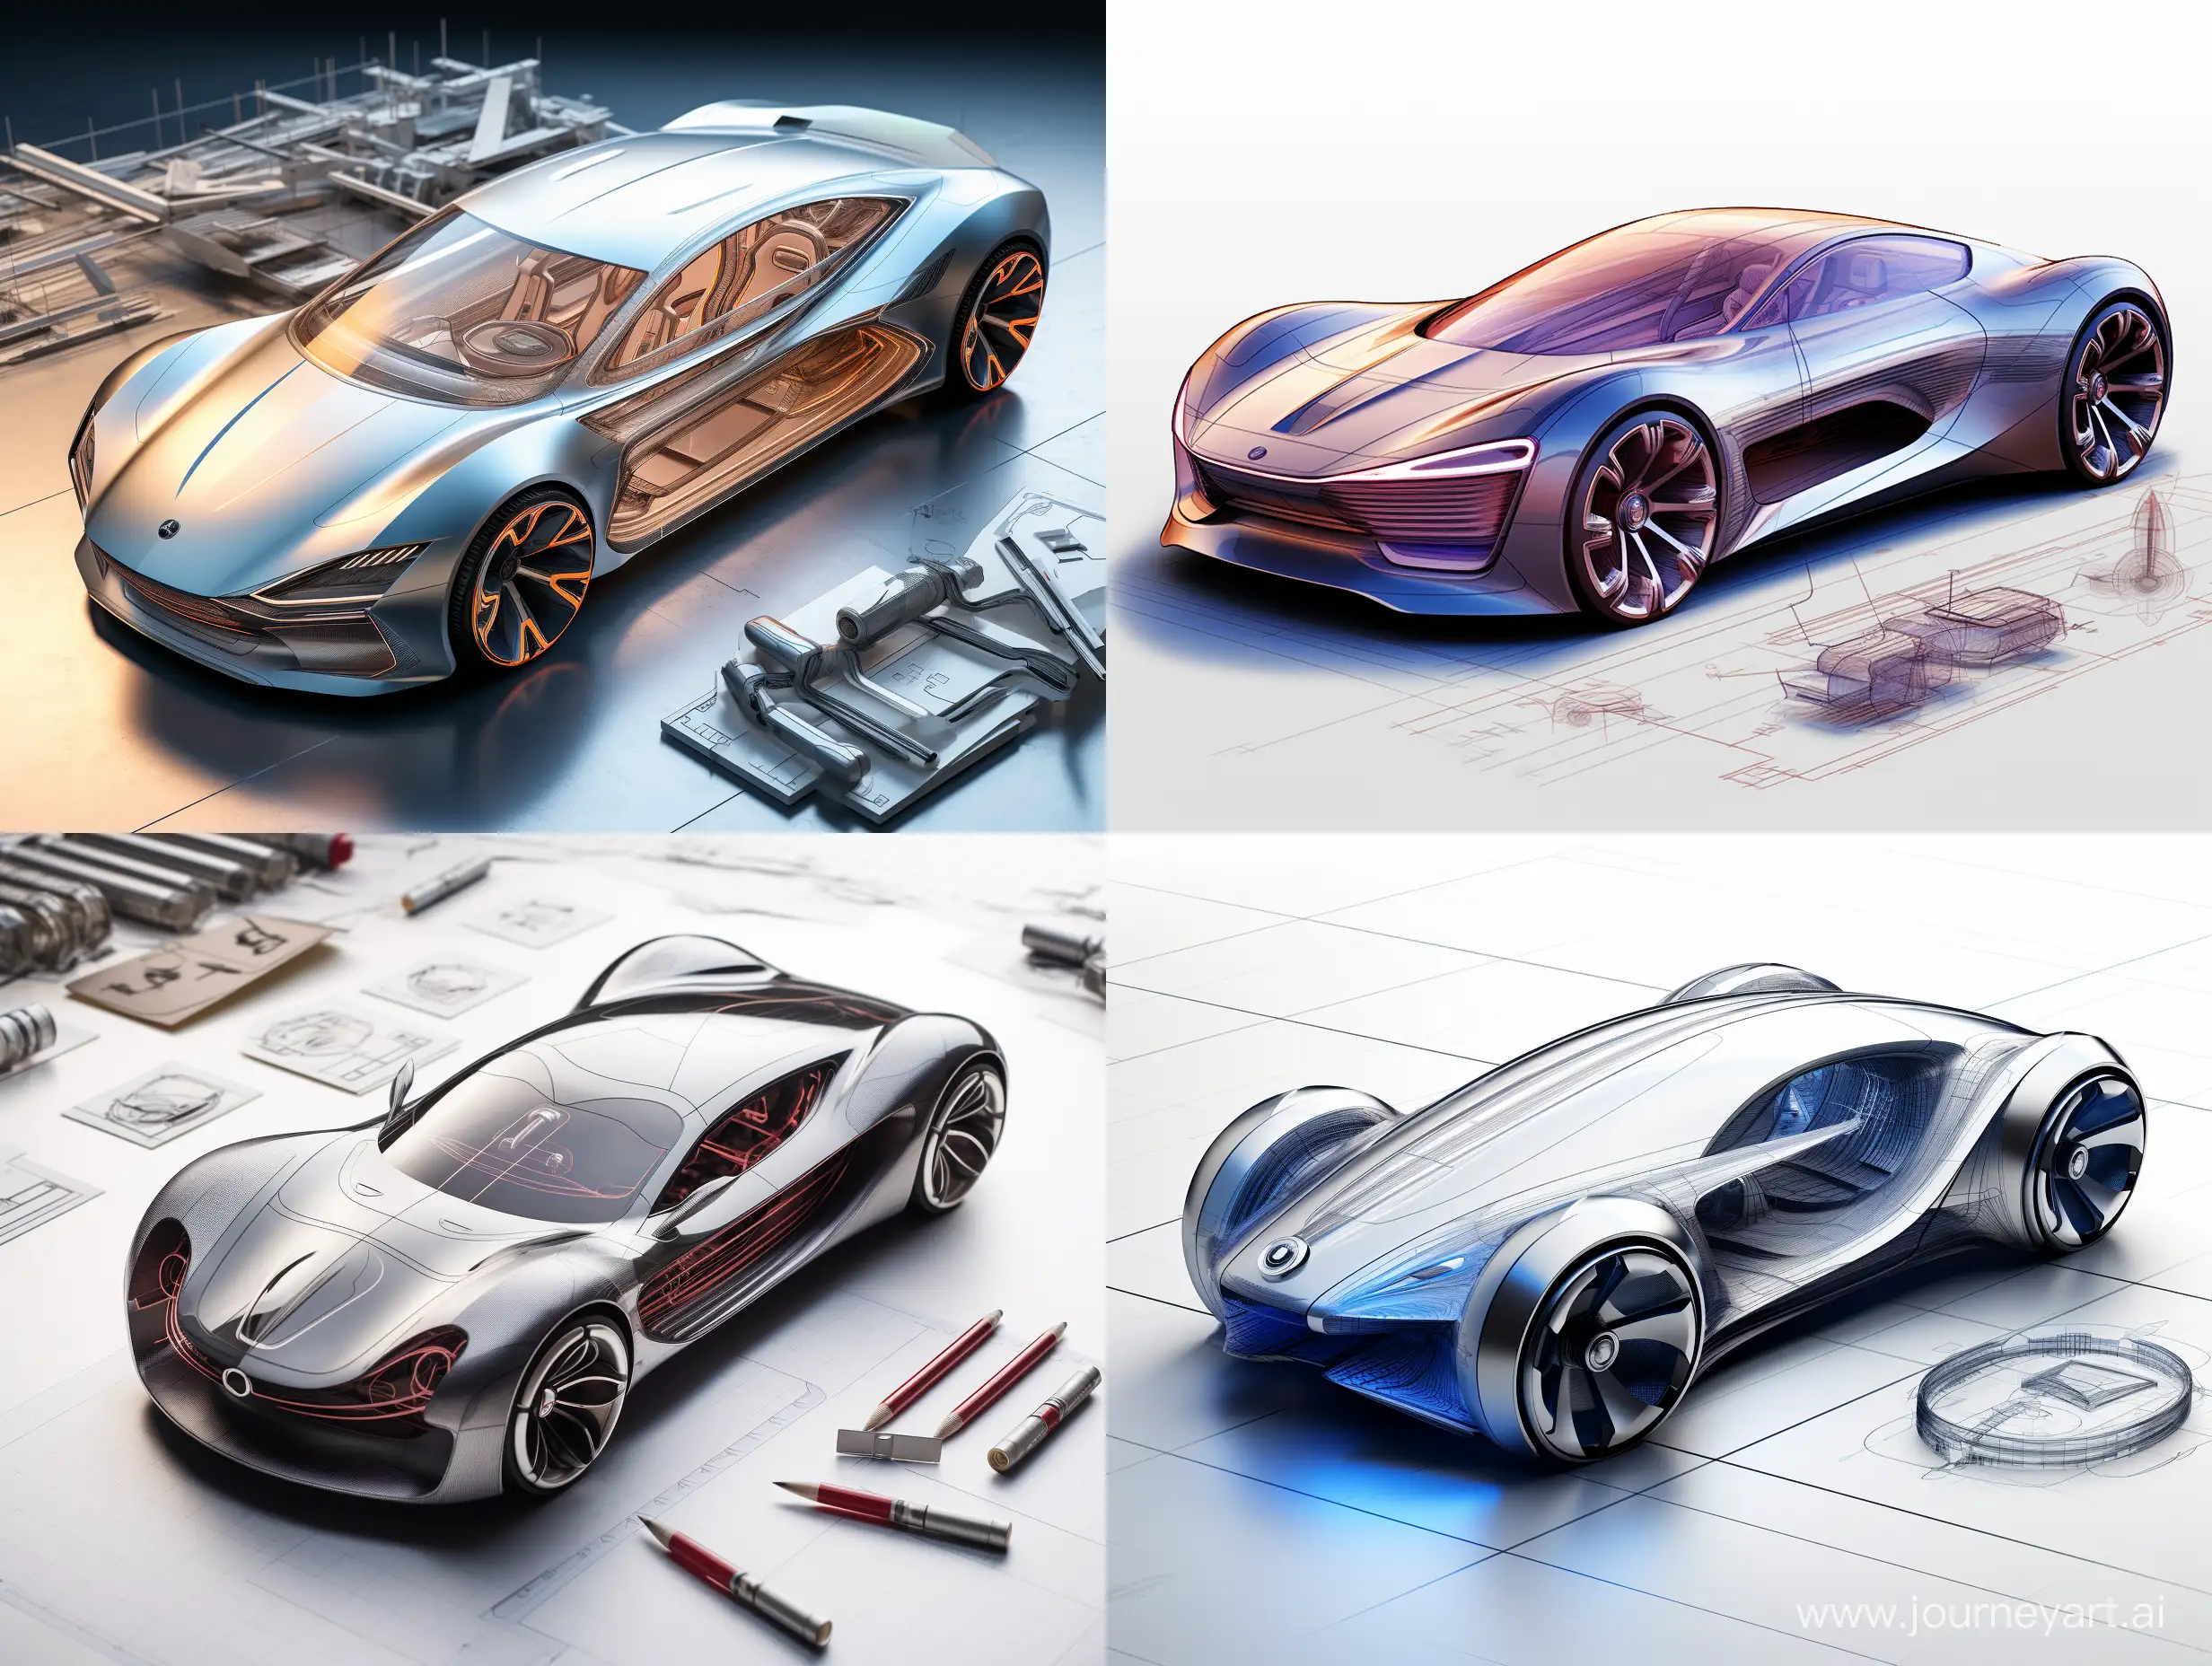 Jdm, Lamborghini,Design a unique sleek, futuristic car blueprint featuring advanced aerodynamics, cutting-edge sustainable energy sources, and innovative interior technologies. 